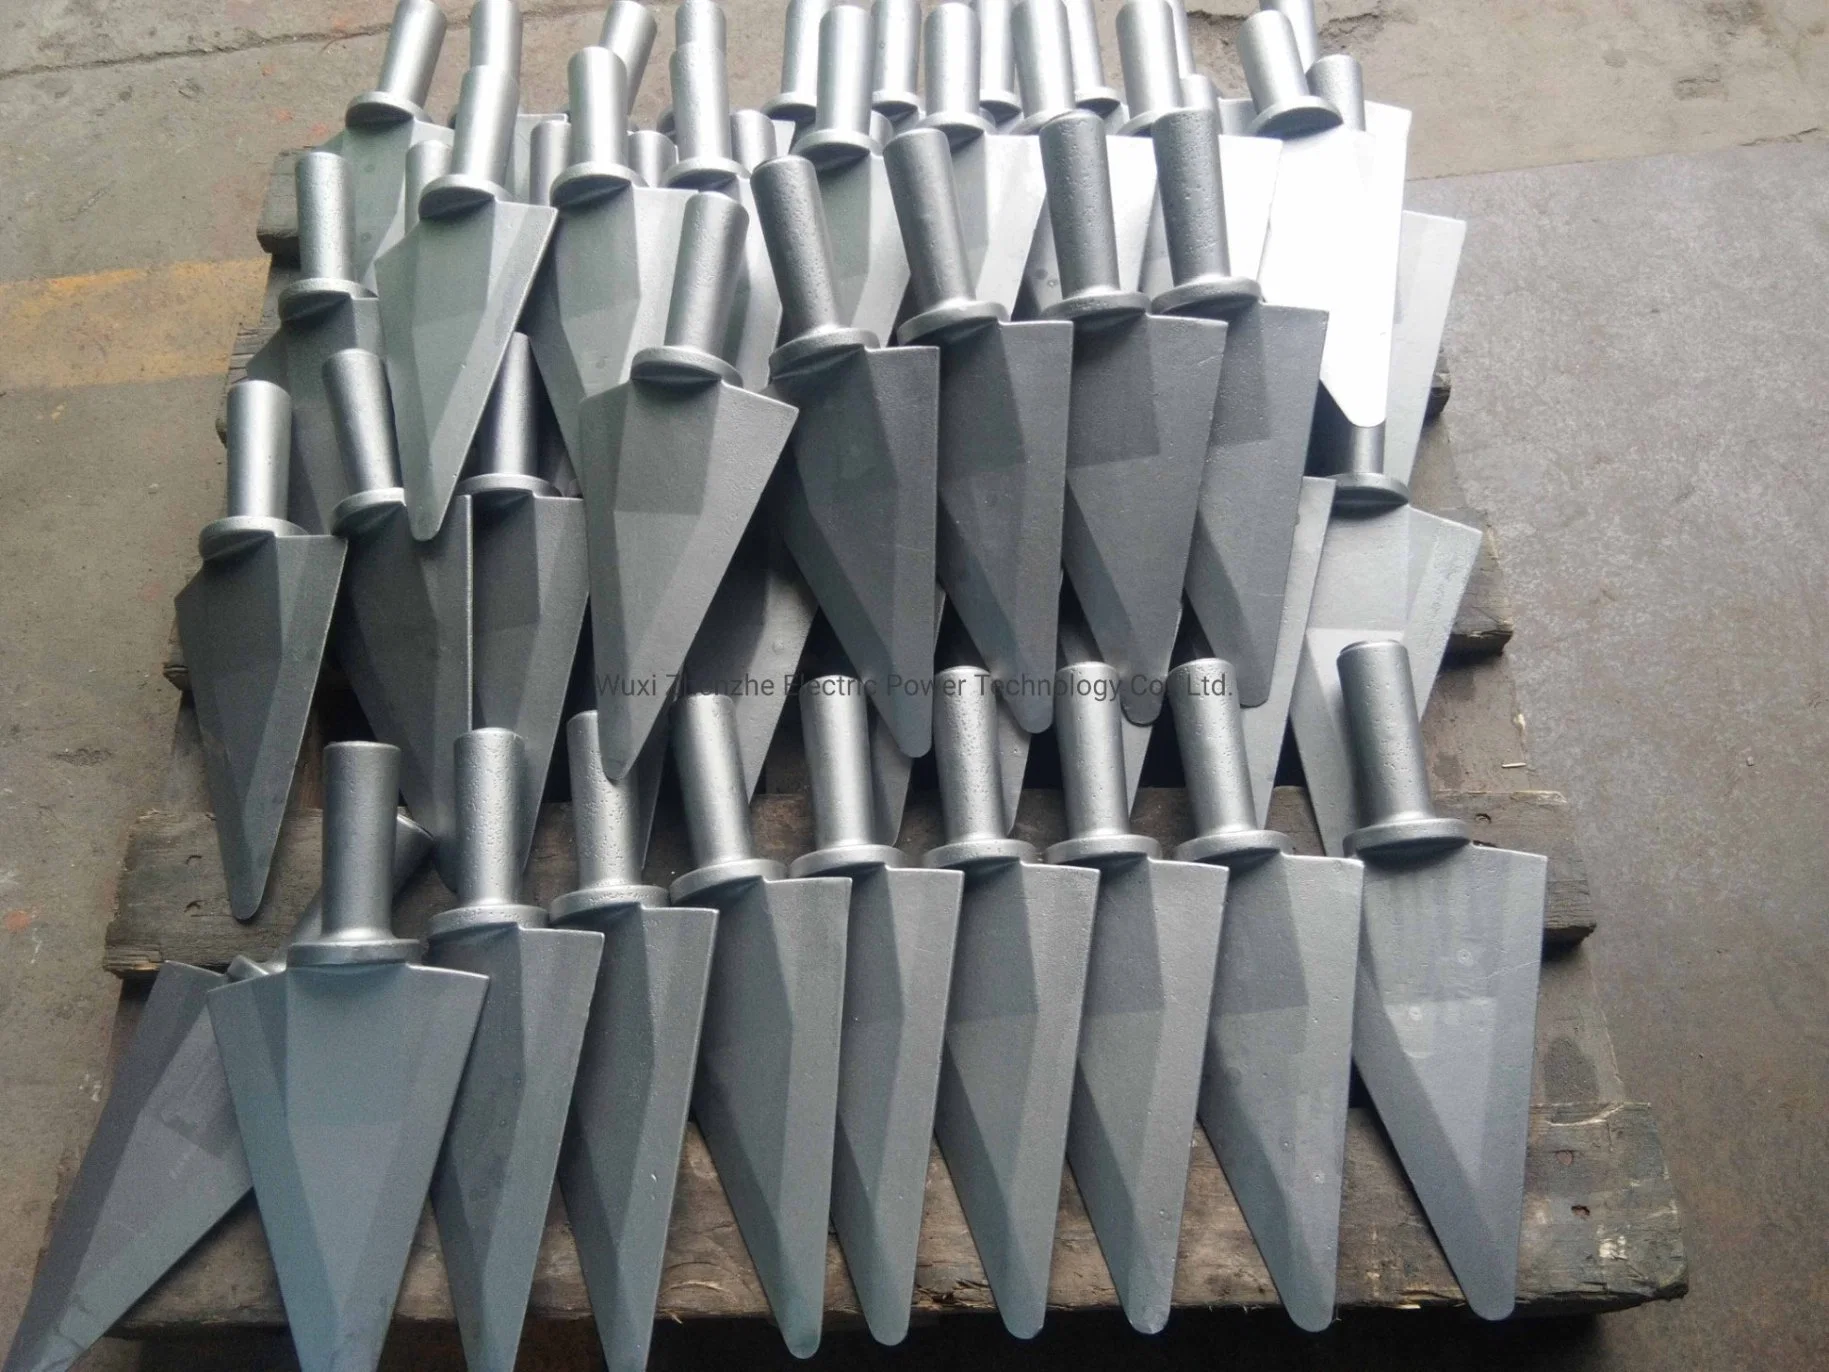 Casting Steel Blade/Air Compressor Blade/Vanes/Impeller Blade Made by Investment Casting